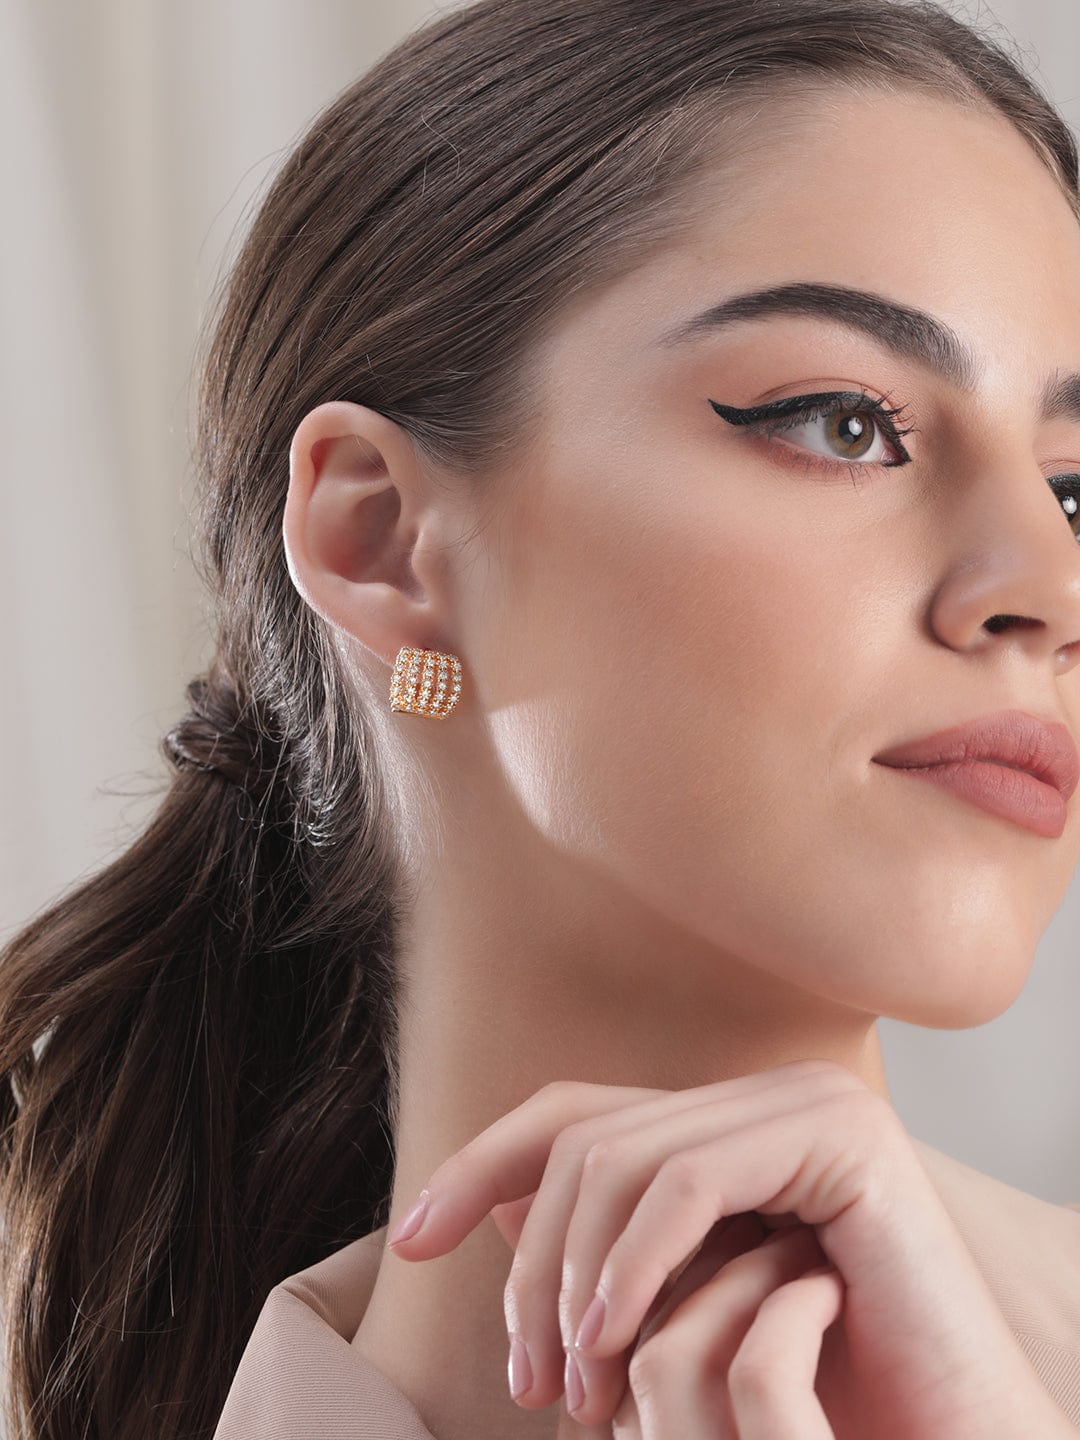 Rubans Voguish Gold-Toned Geometric Studs Earrings Earrings